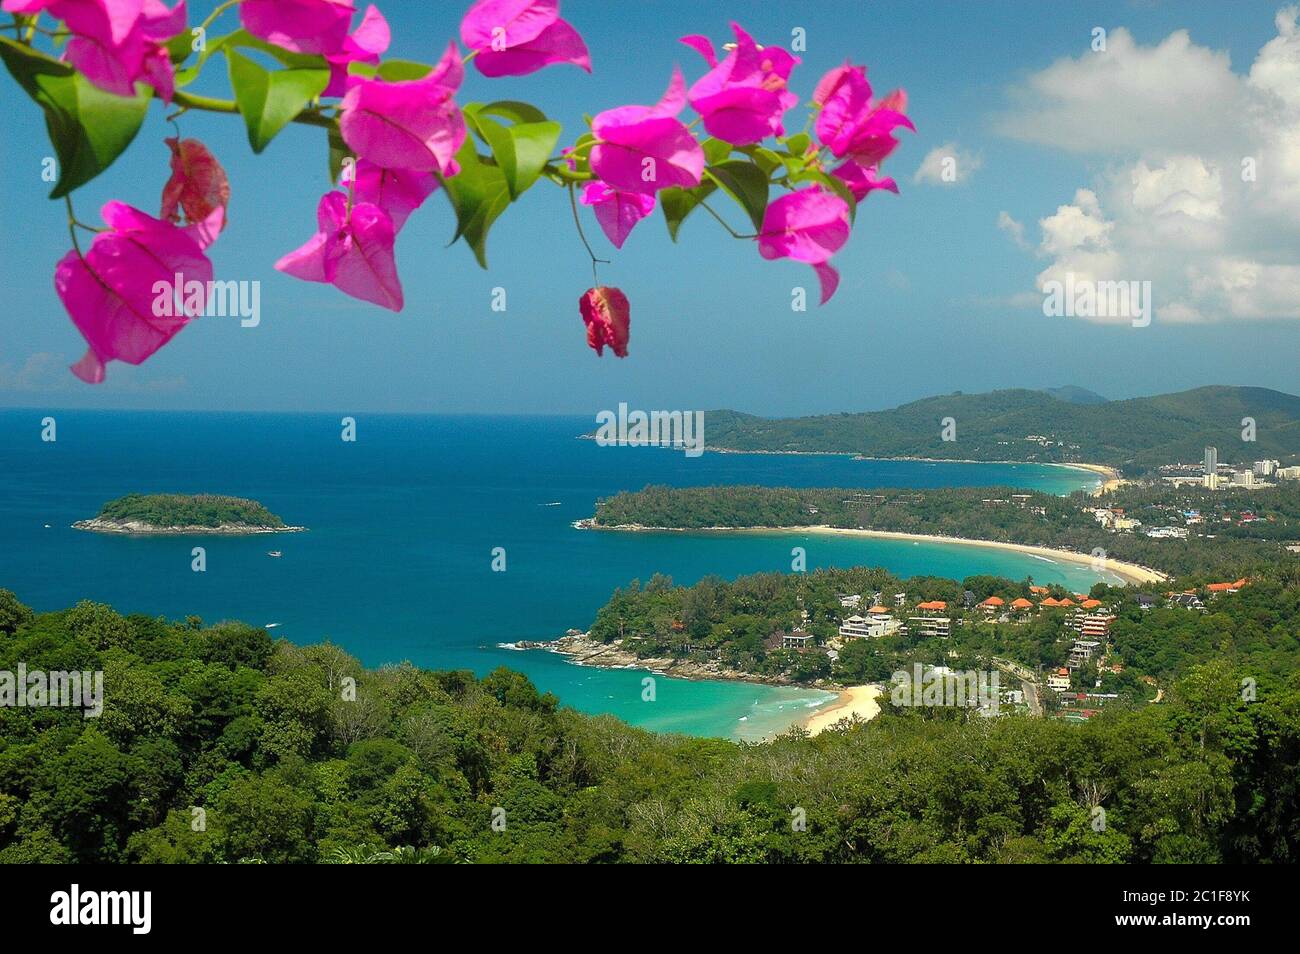 phuket island with three bays Stock Photo